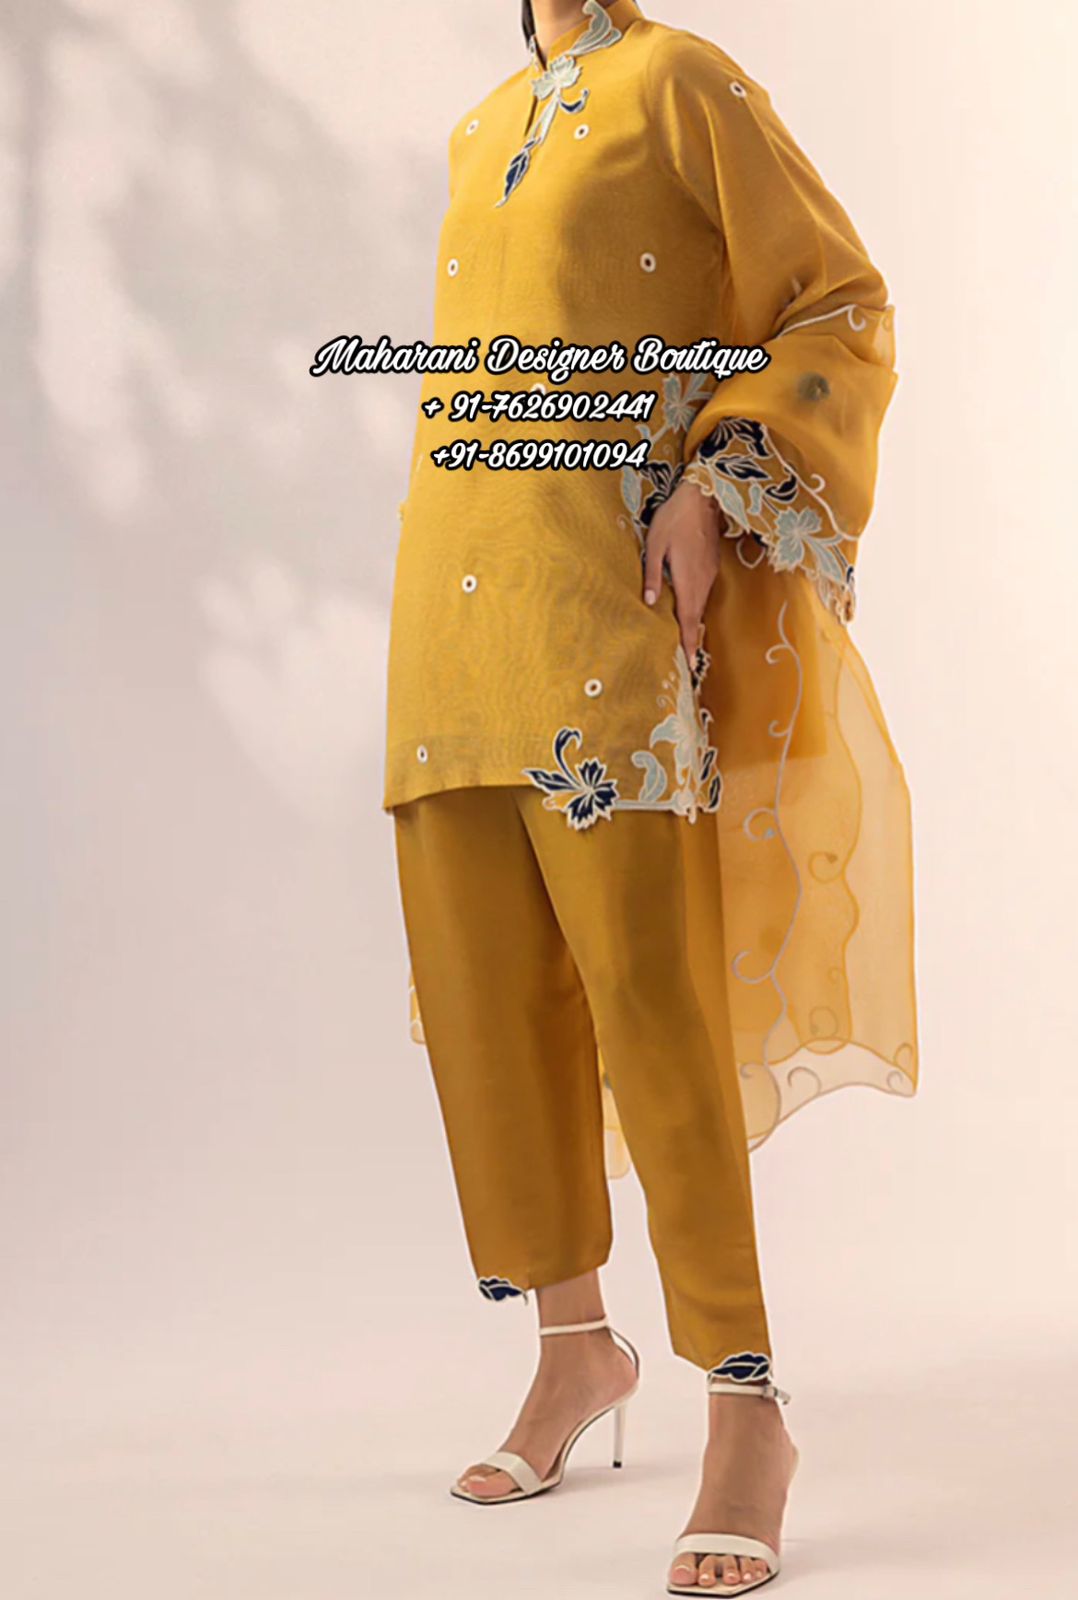 Beautiful Trouser designs||Ladies Pant designs||Stylish Capri  designs||Poncha designs||Salwar design - YouTube